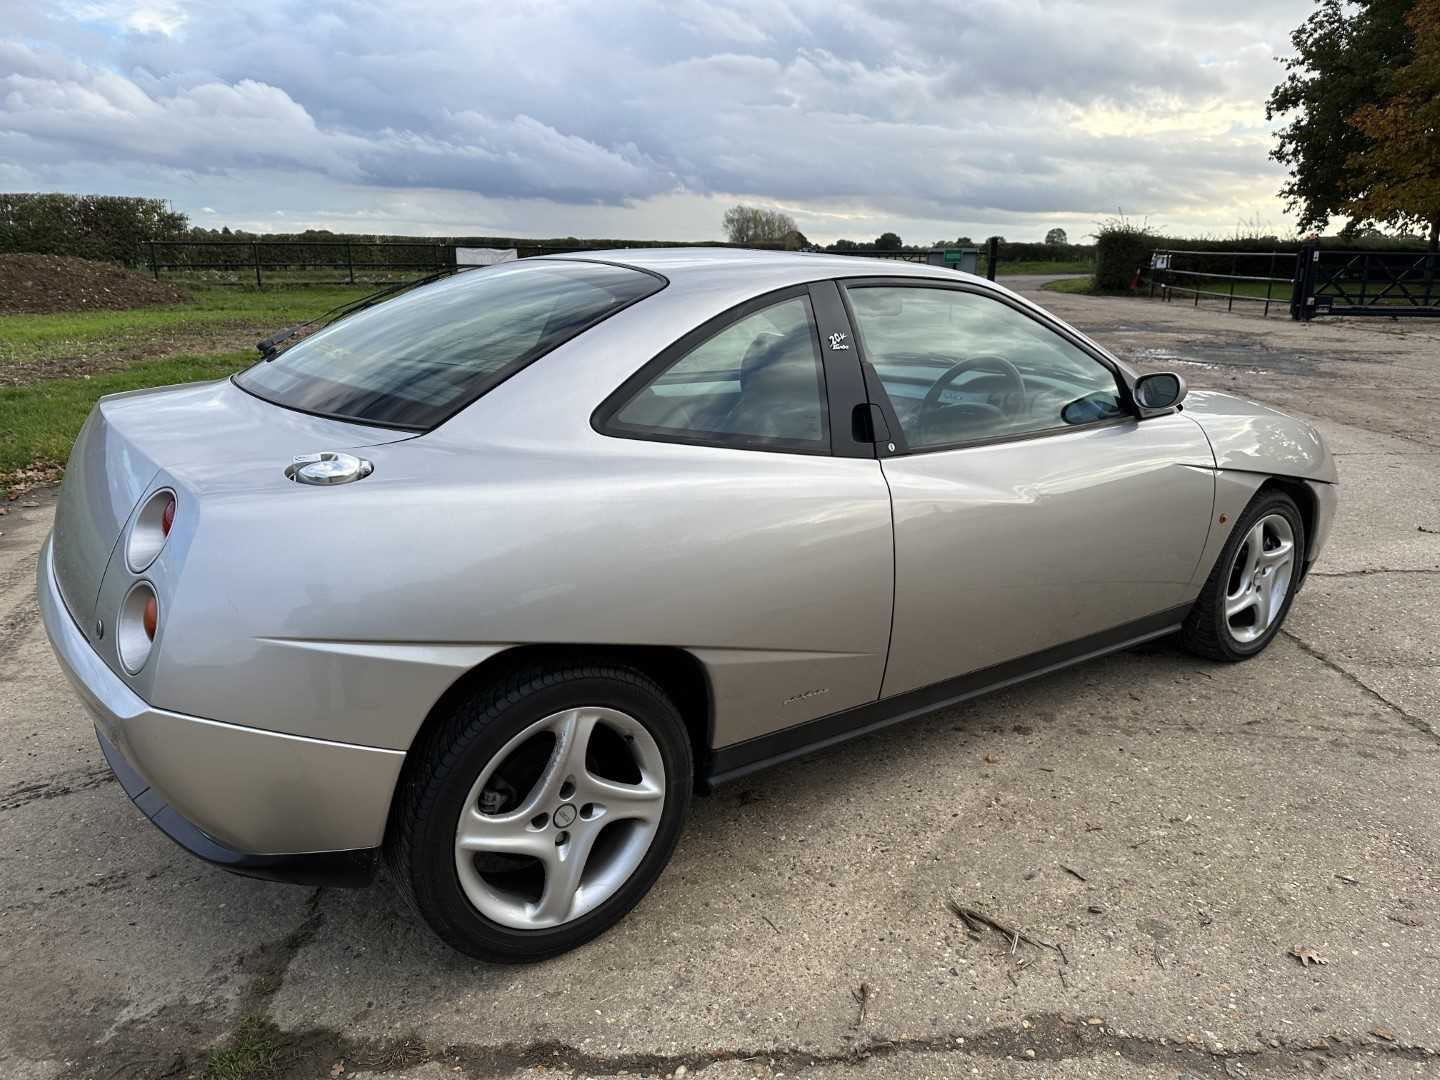 1998 Fiat Coupe 2.0 20V Turbo, 1998cc, reg. S246 VAR - Image 12 of 22